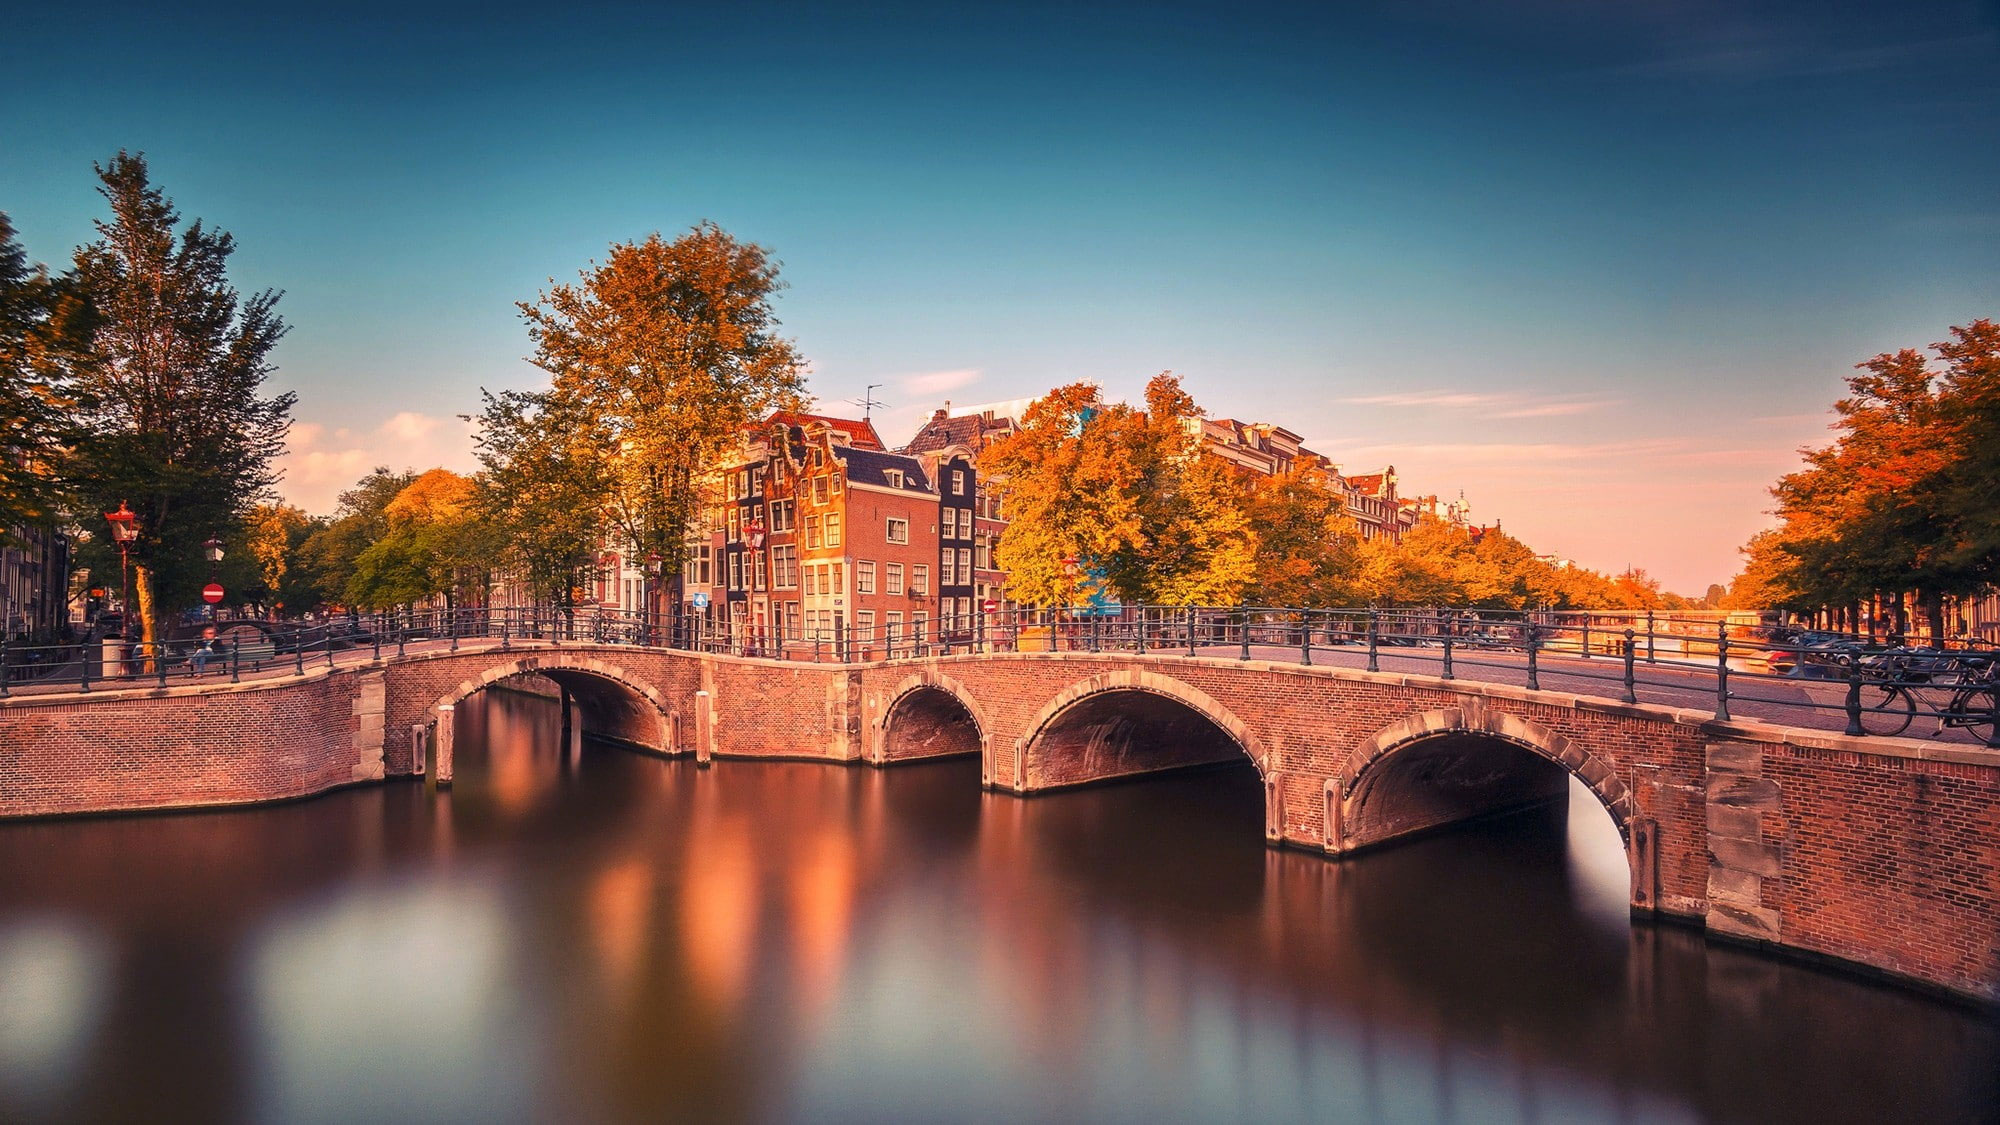 Amsterdam wallpaper, Nederland, bridge, fall, Buildings, trees, river, canal